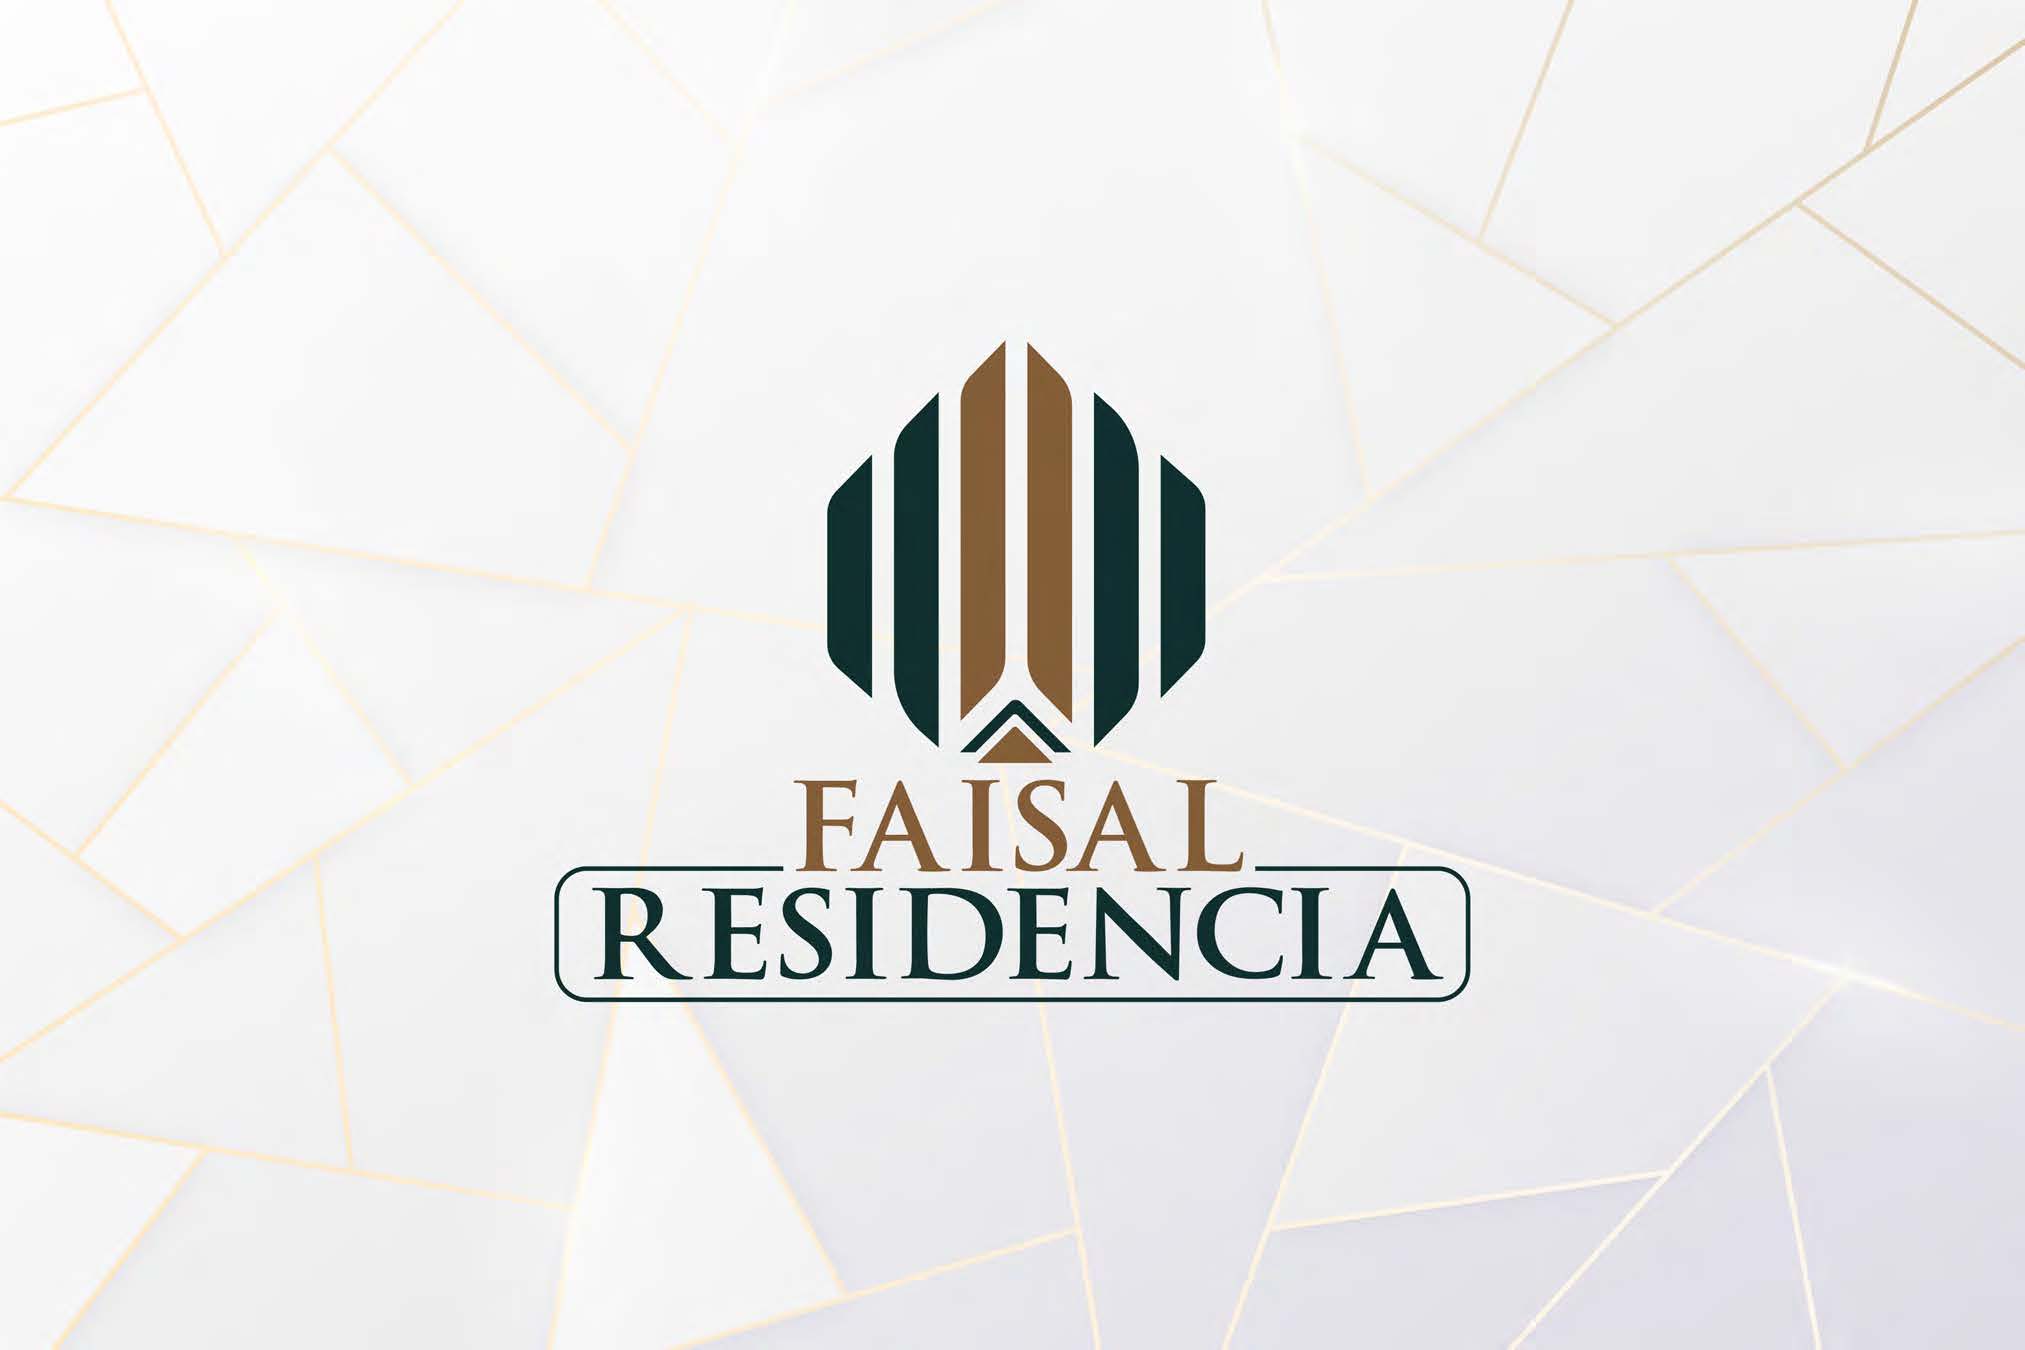 Faisal Residencia